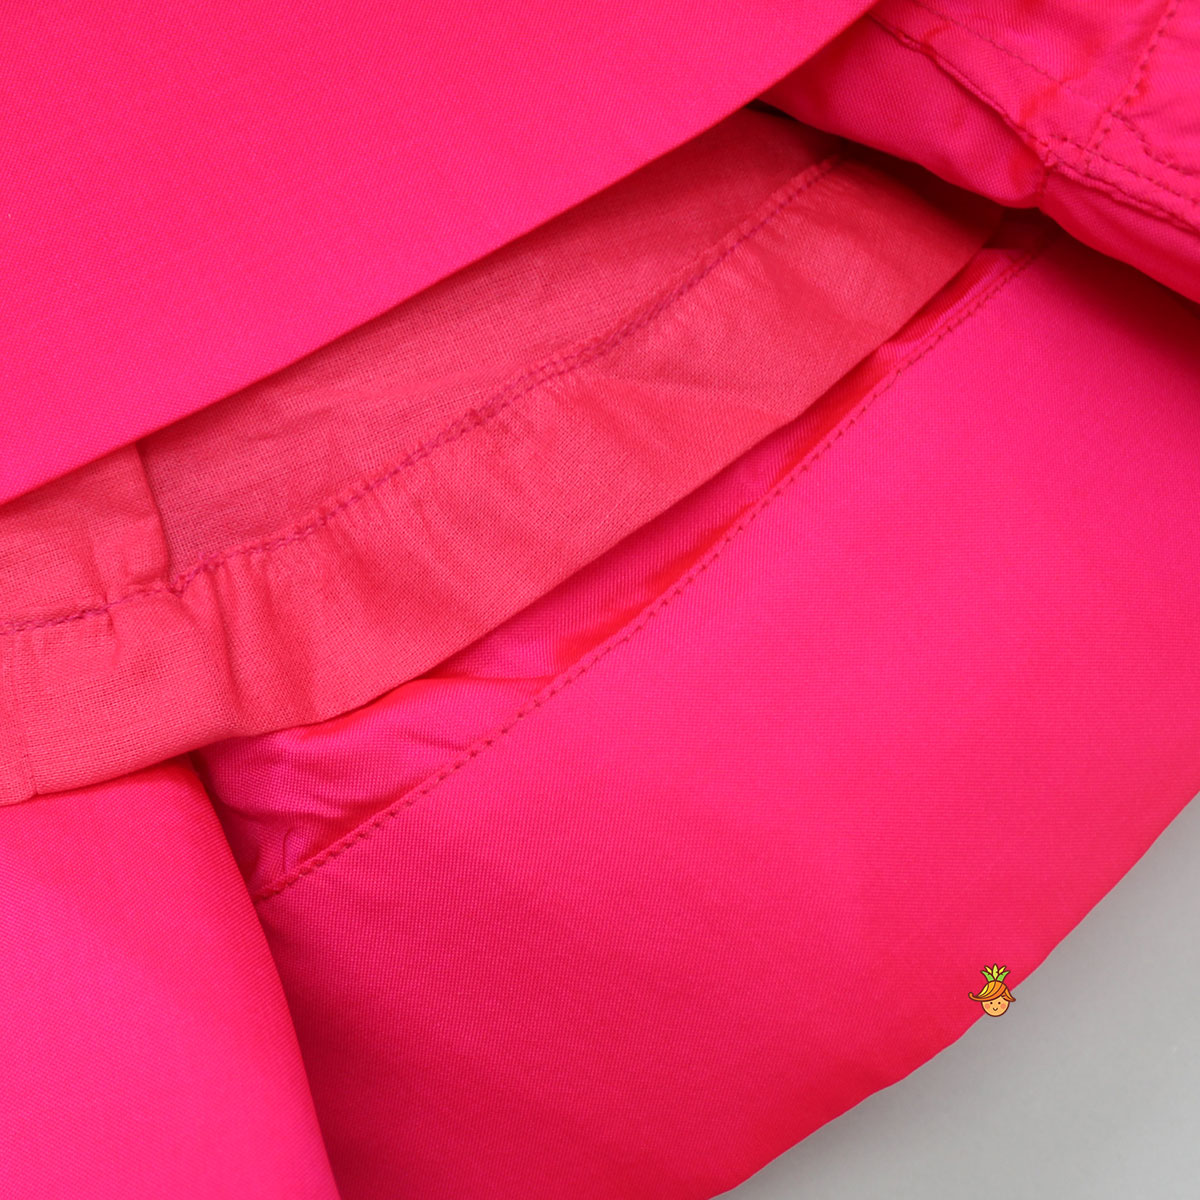 Pink Frills Enhanced Layered Dress